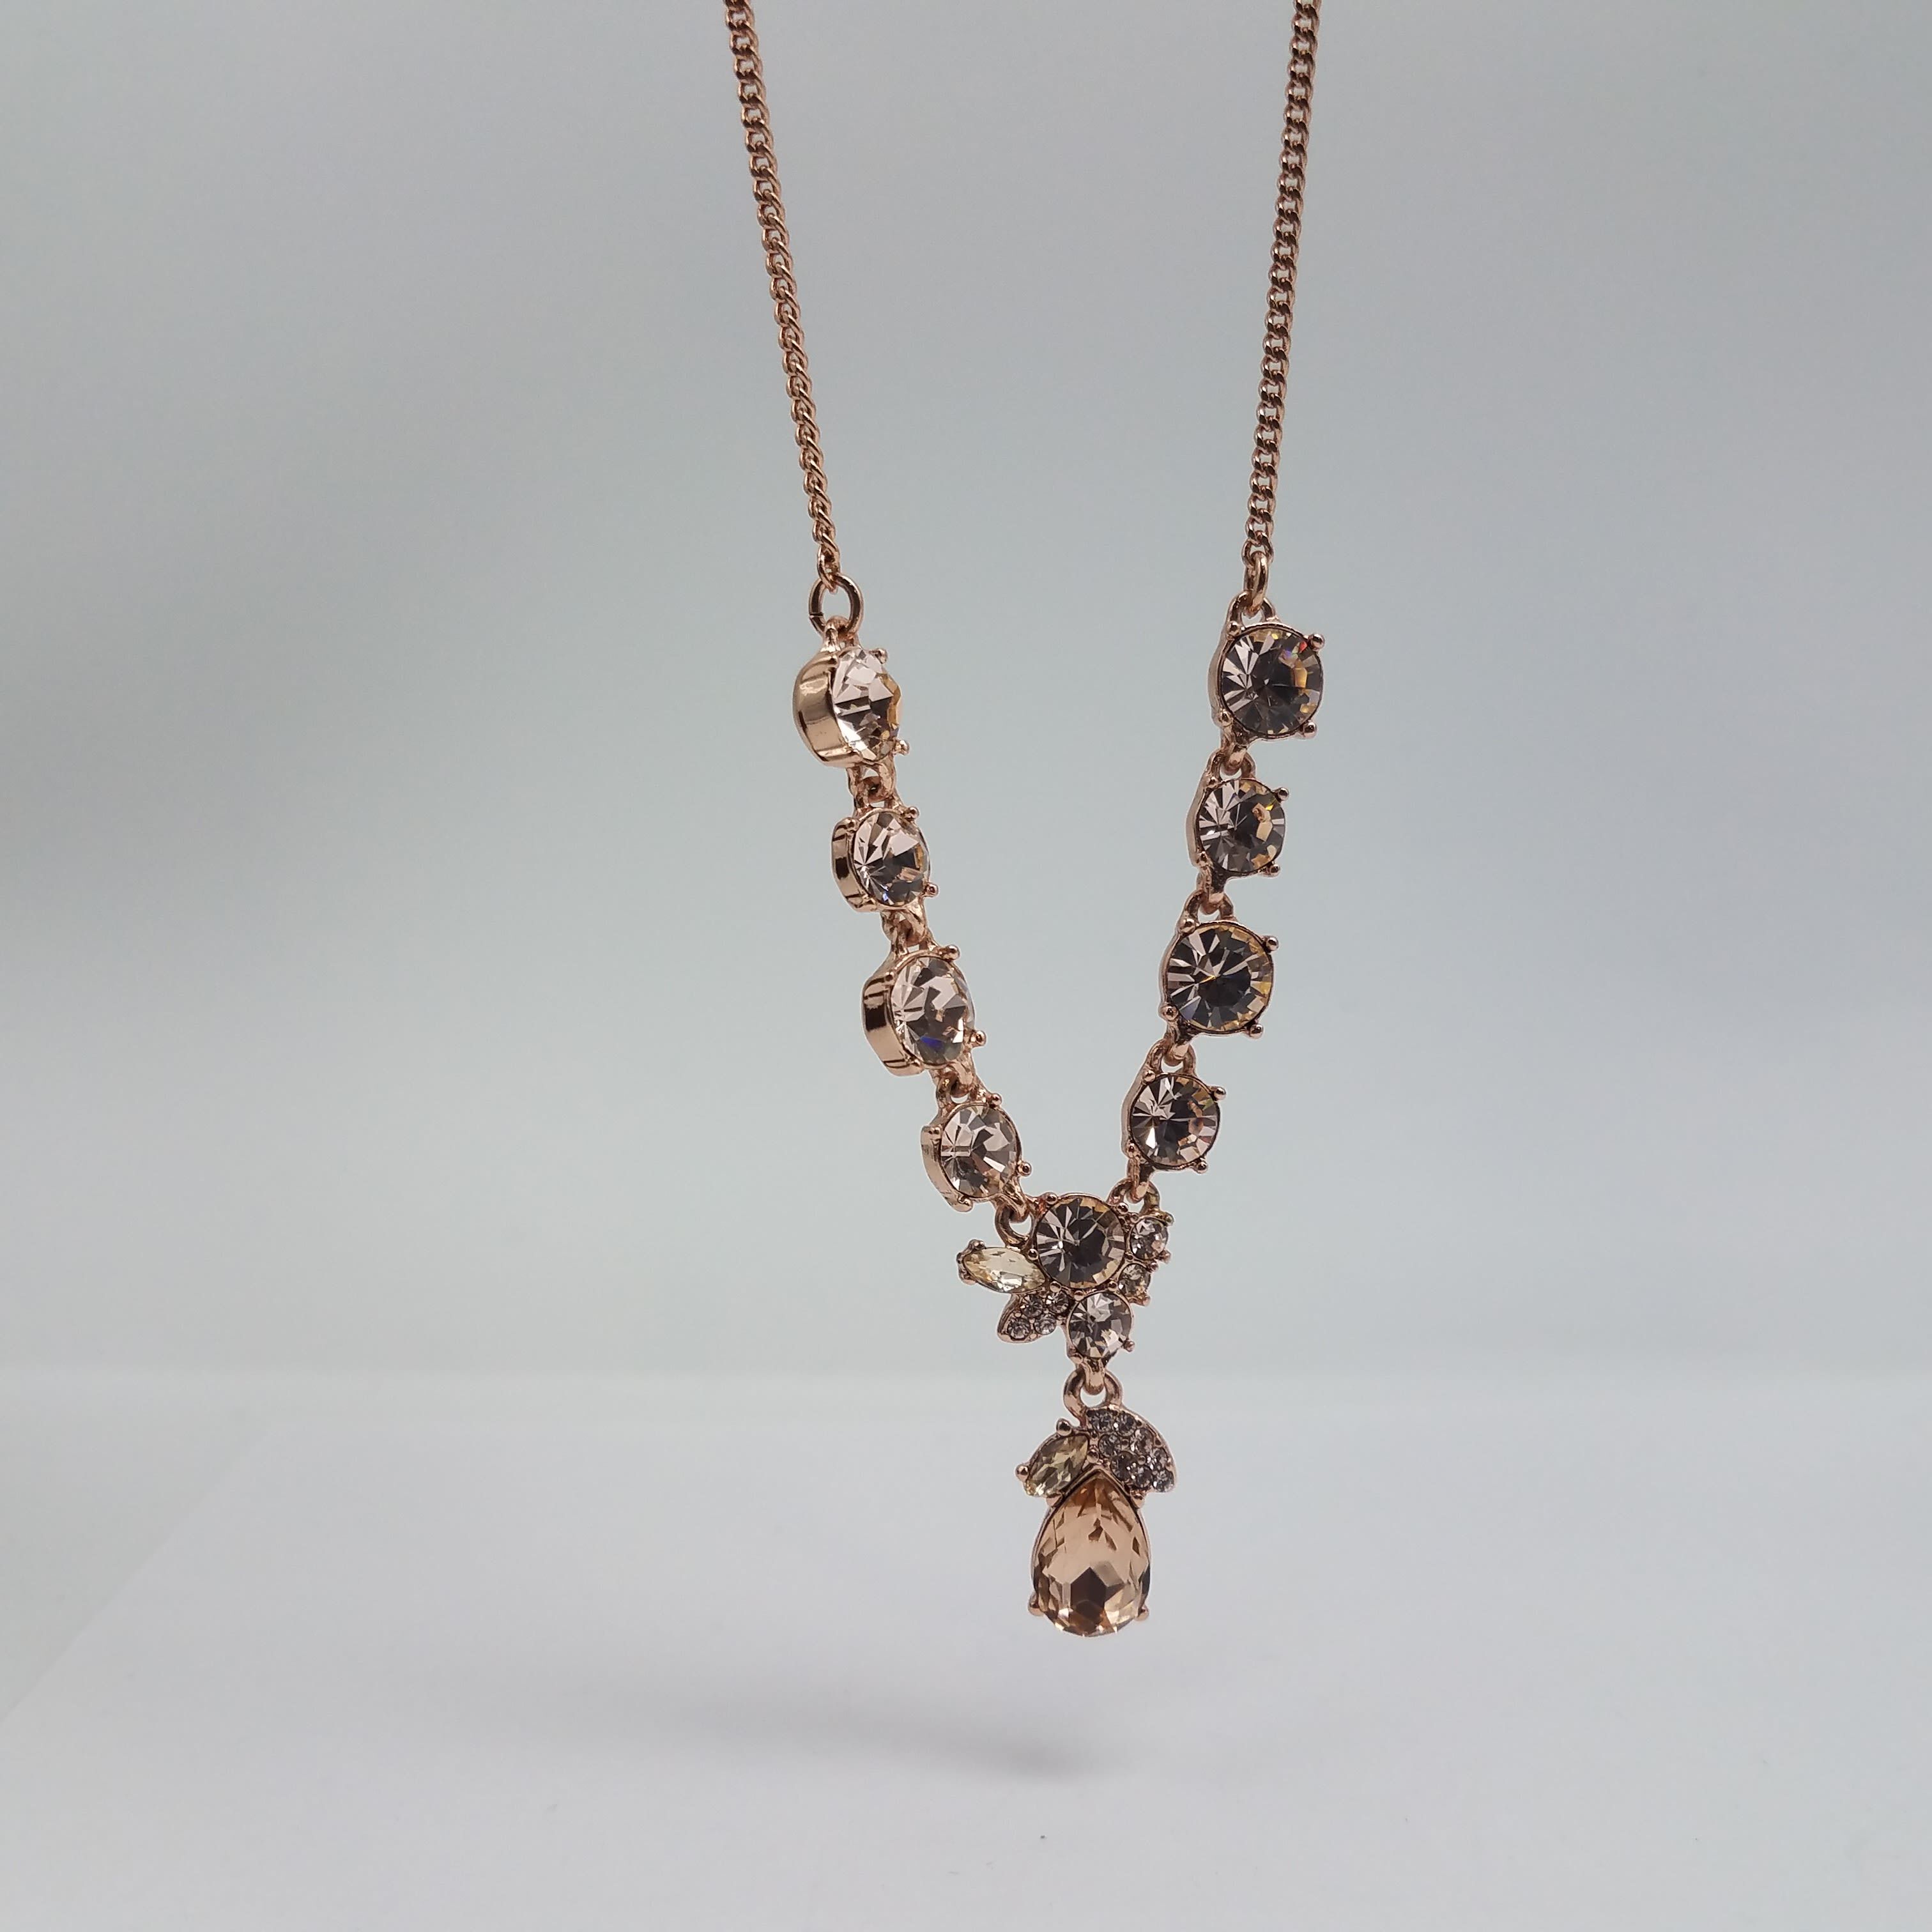 Givenchy | Jewelry | Givenchy Crystal Swarovski Necklace | Poshmark